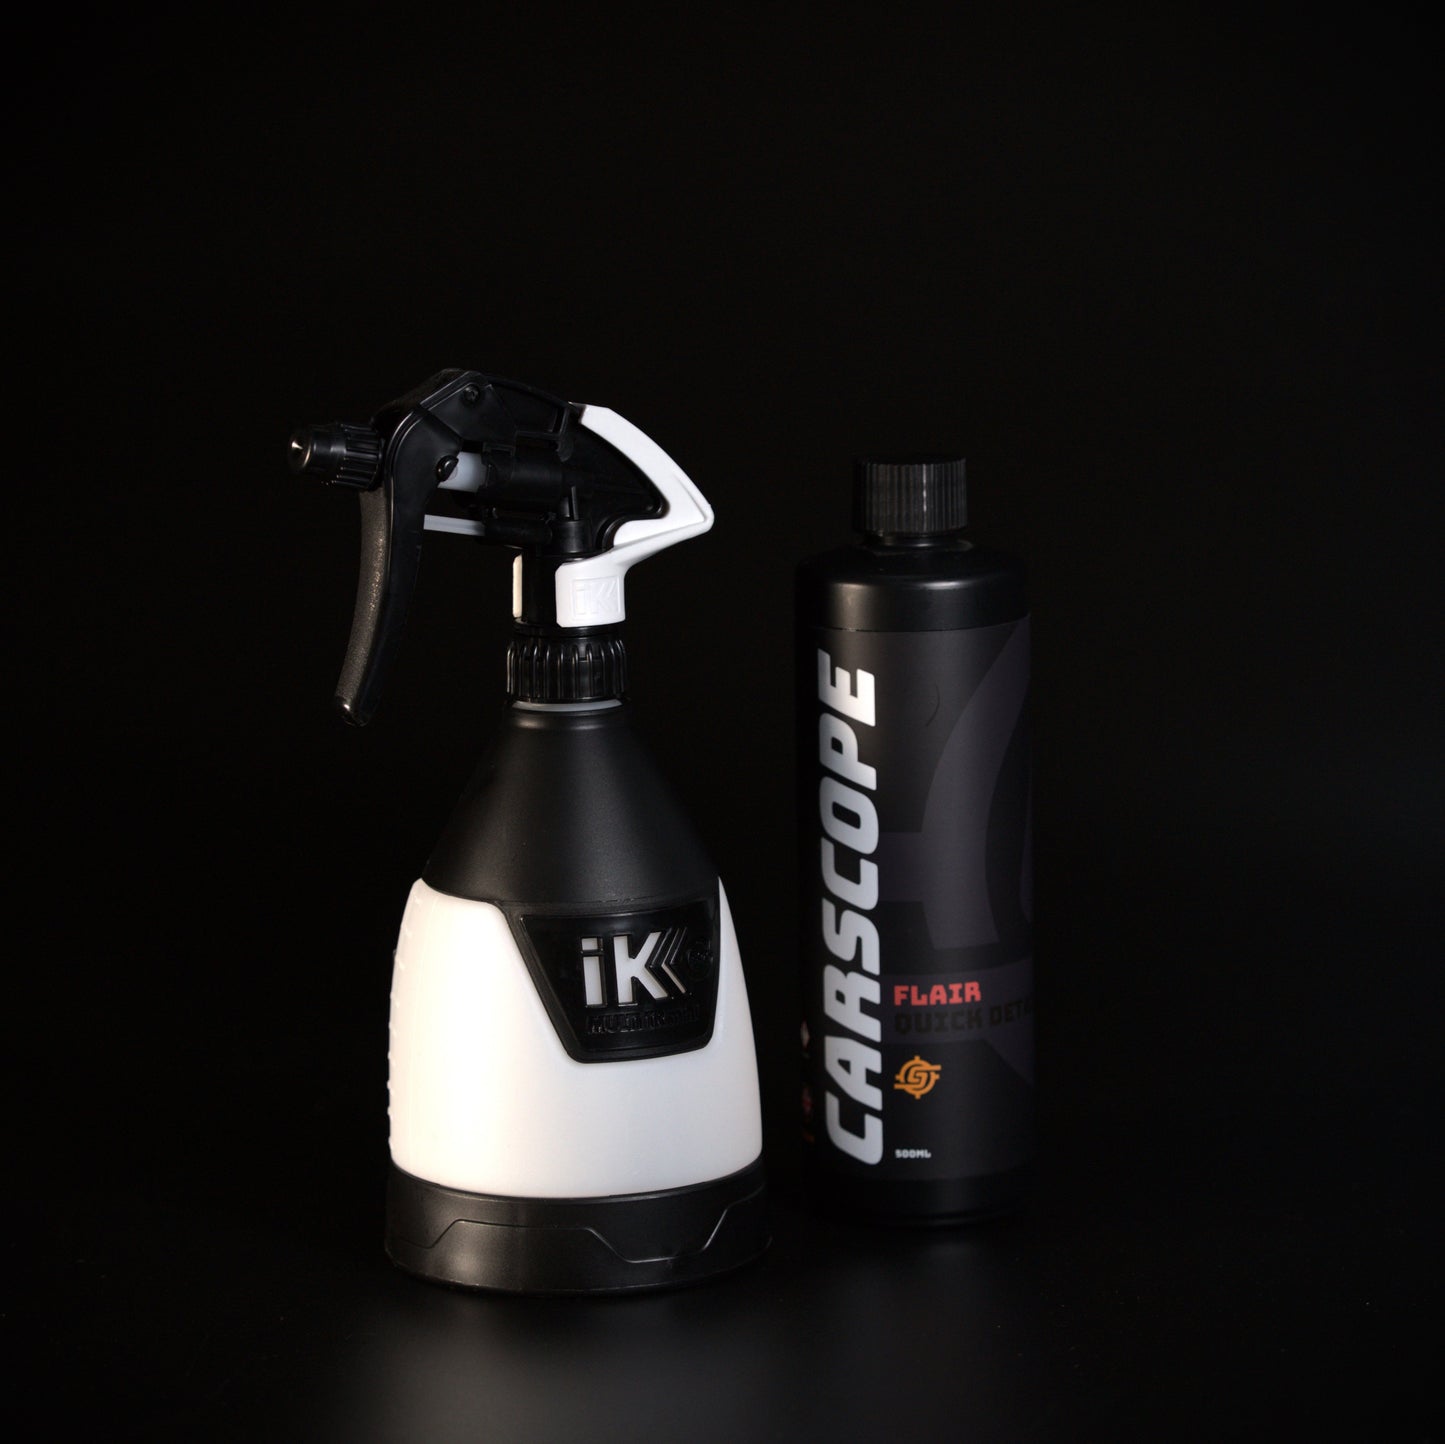 Flair quick detailer sprayer kit